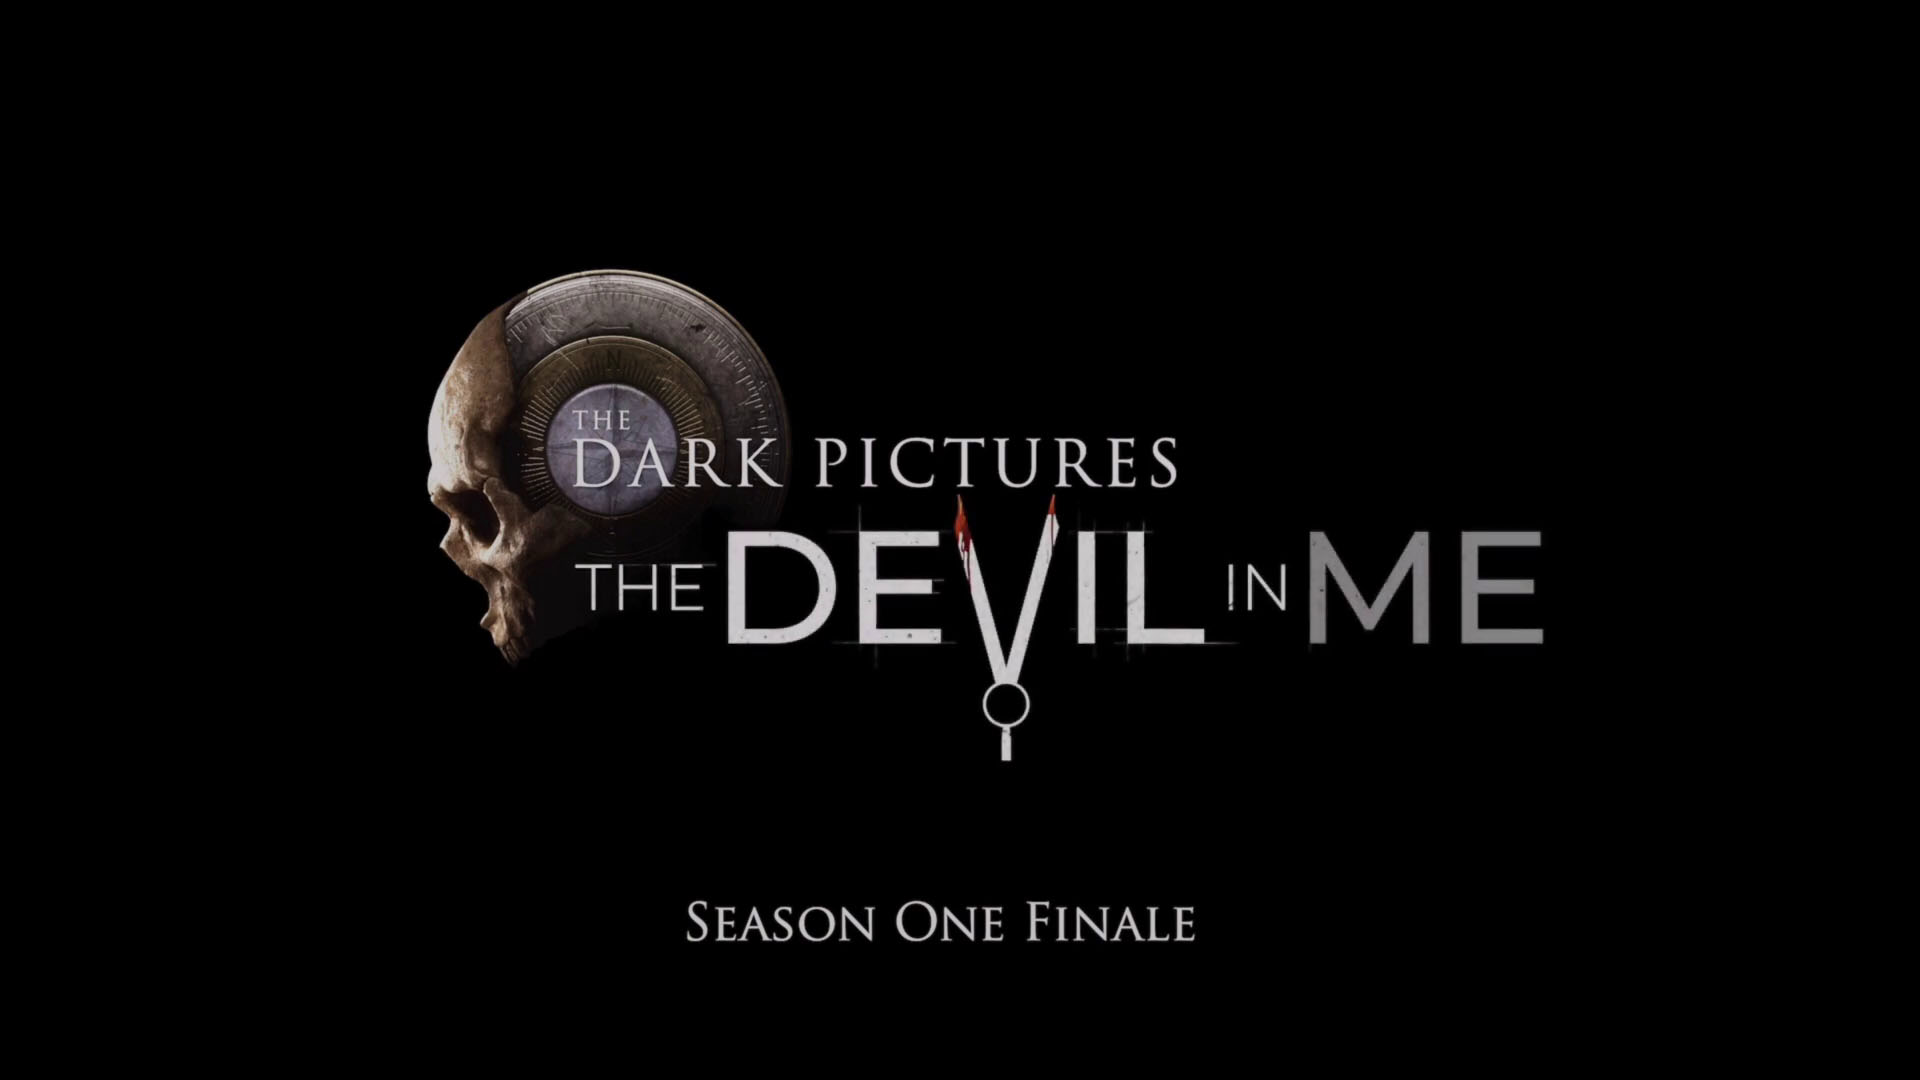 The Dark Pictures Anthology: The Devil in Me - PlayStation 4 em